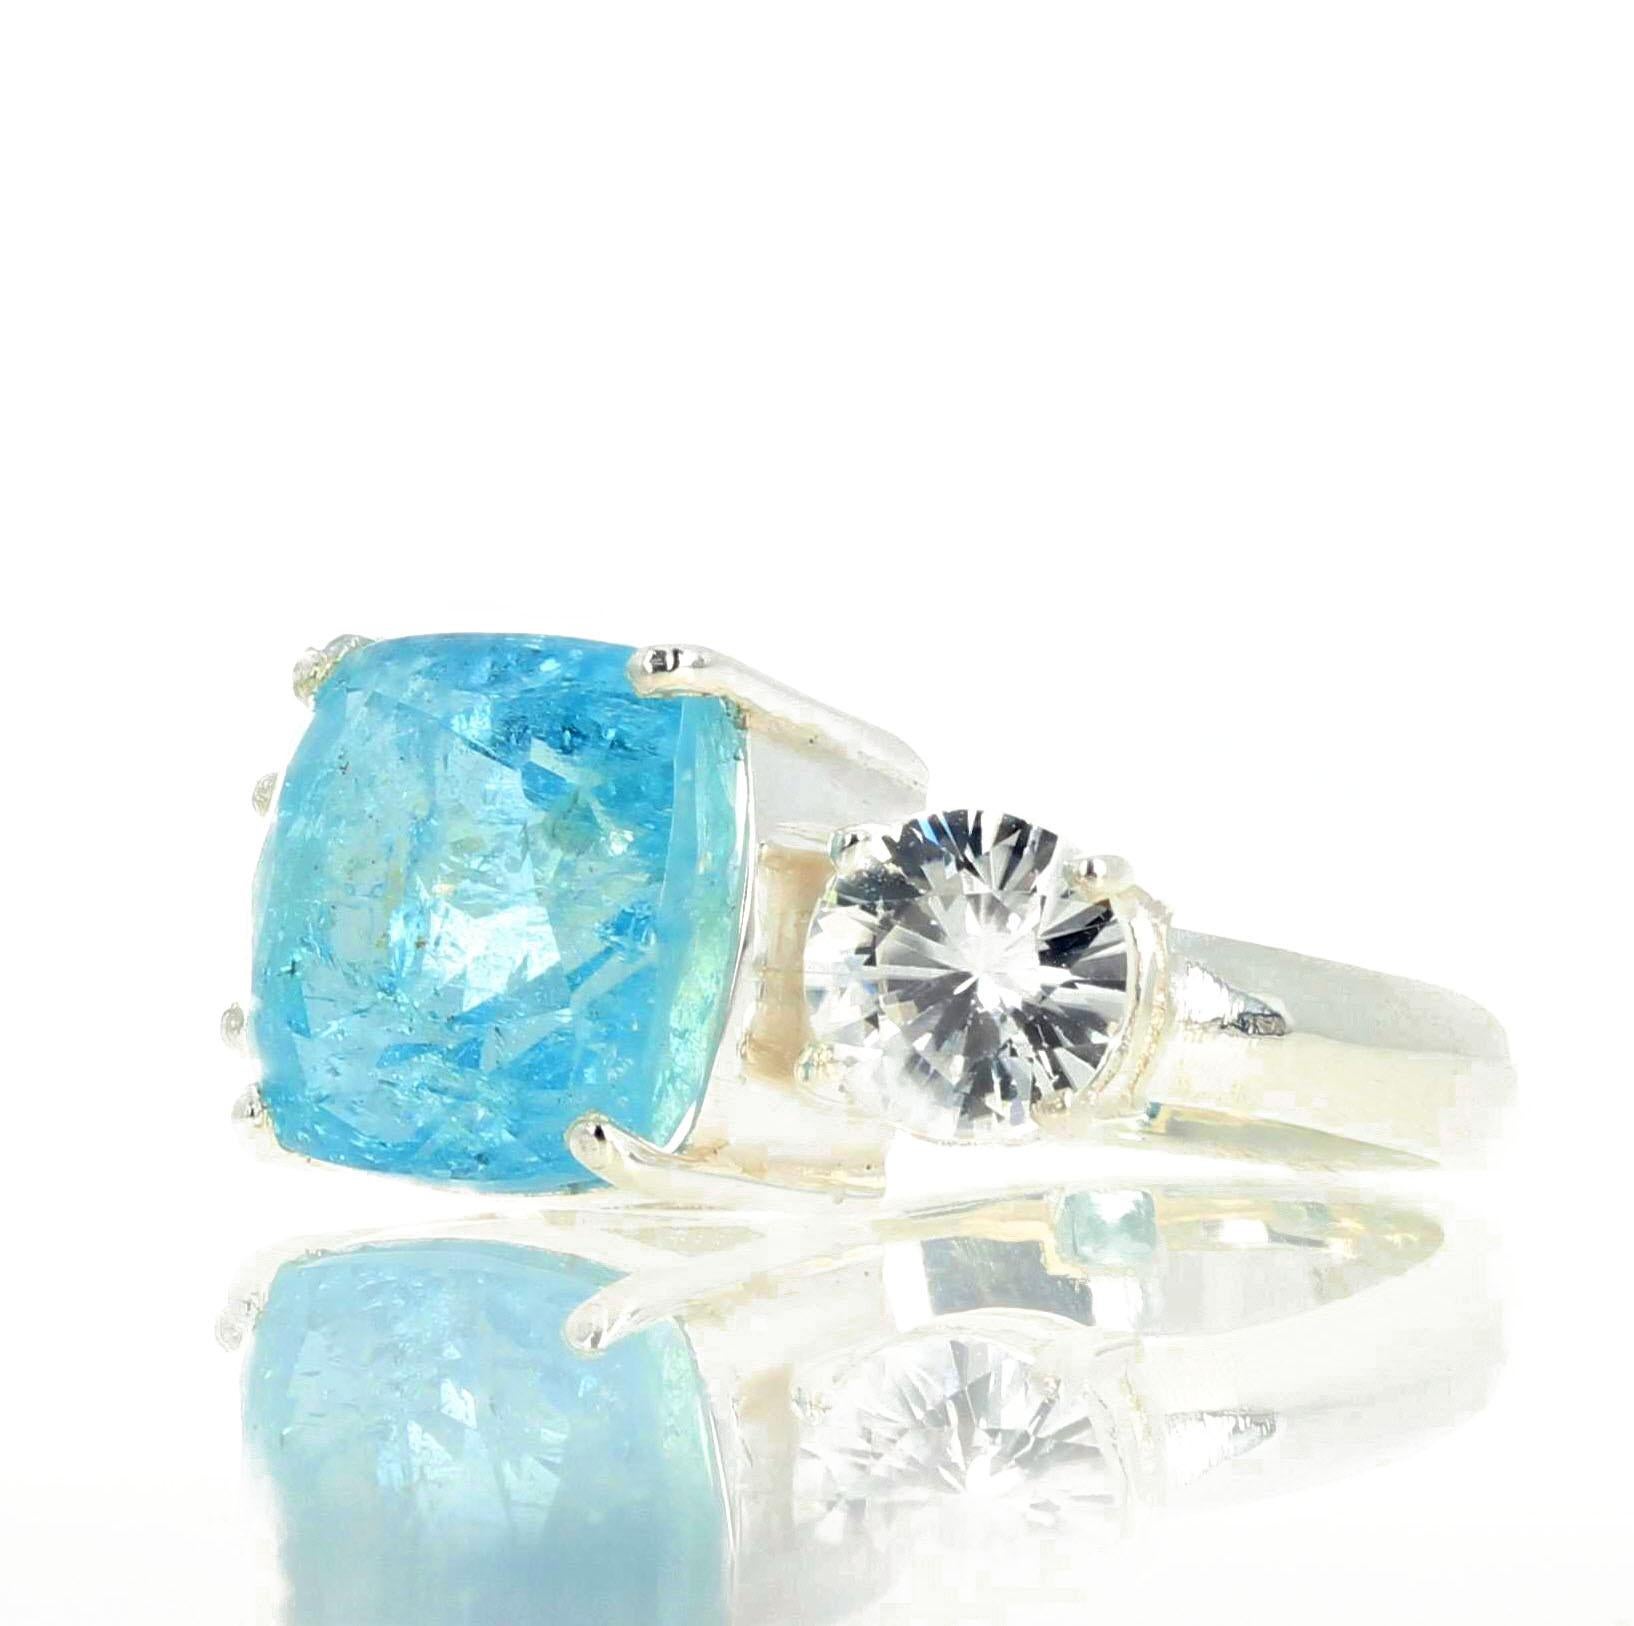 Cushion Cut Gemjunky Elegant Lovely 6.76Ct Intense Blue Aquamarine&Natural White Zircon Ring